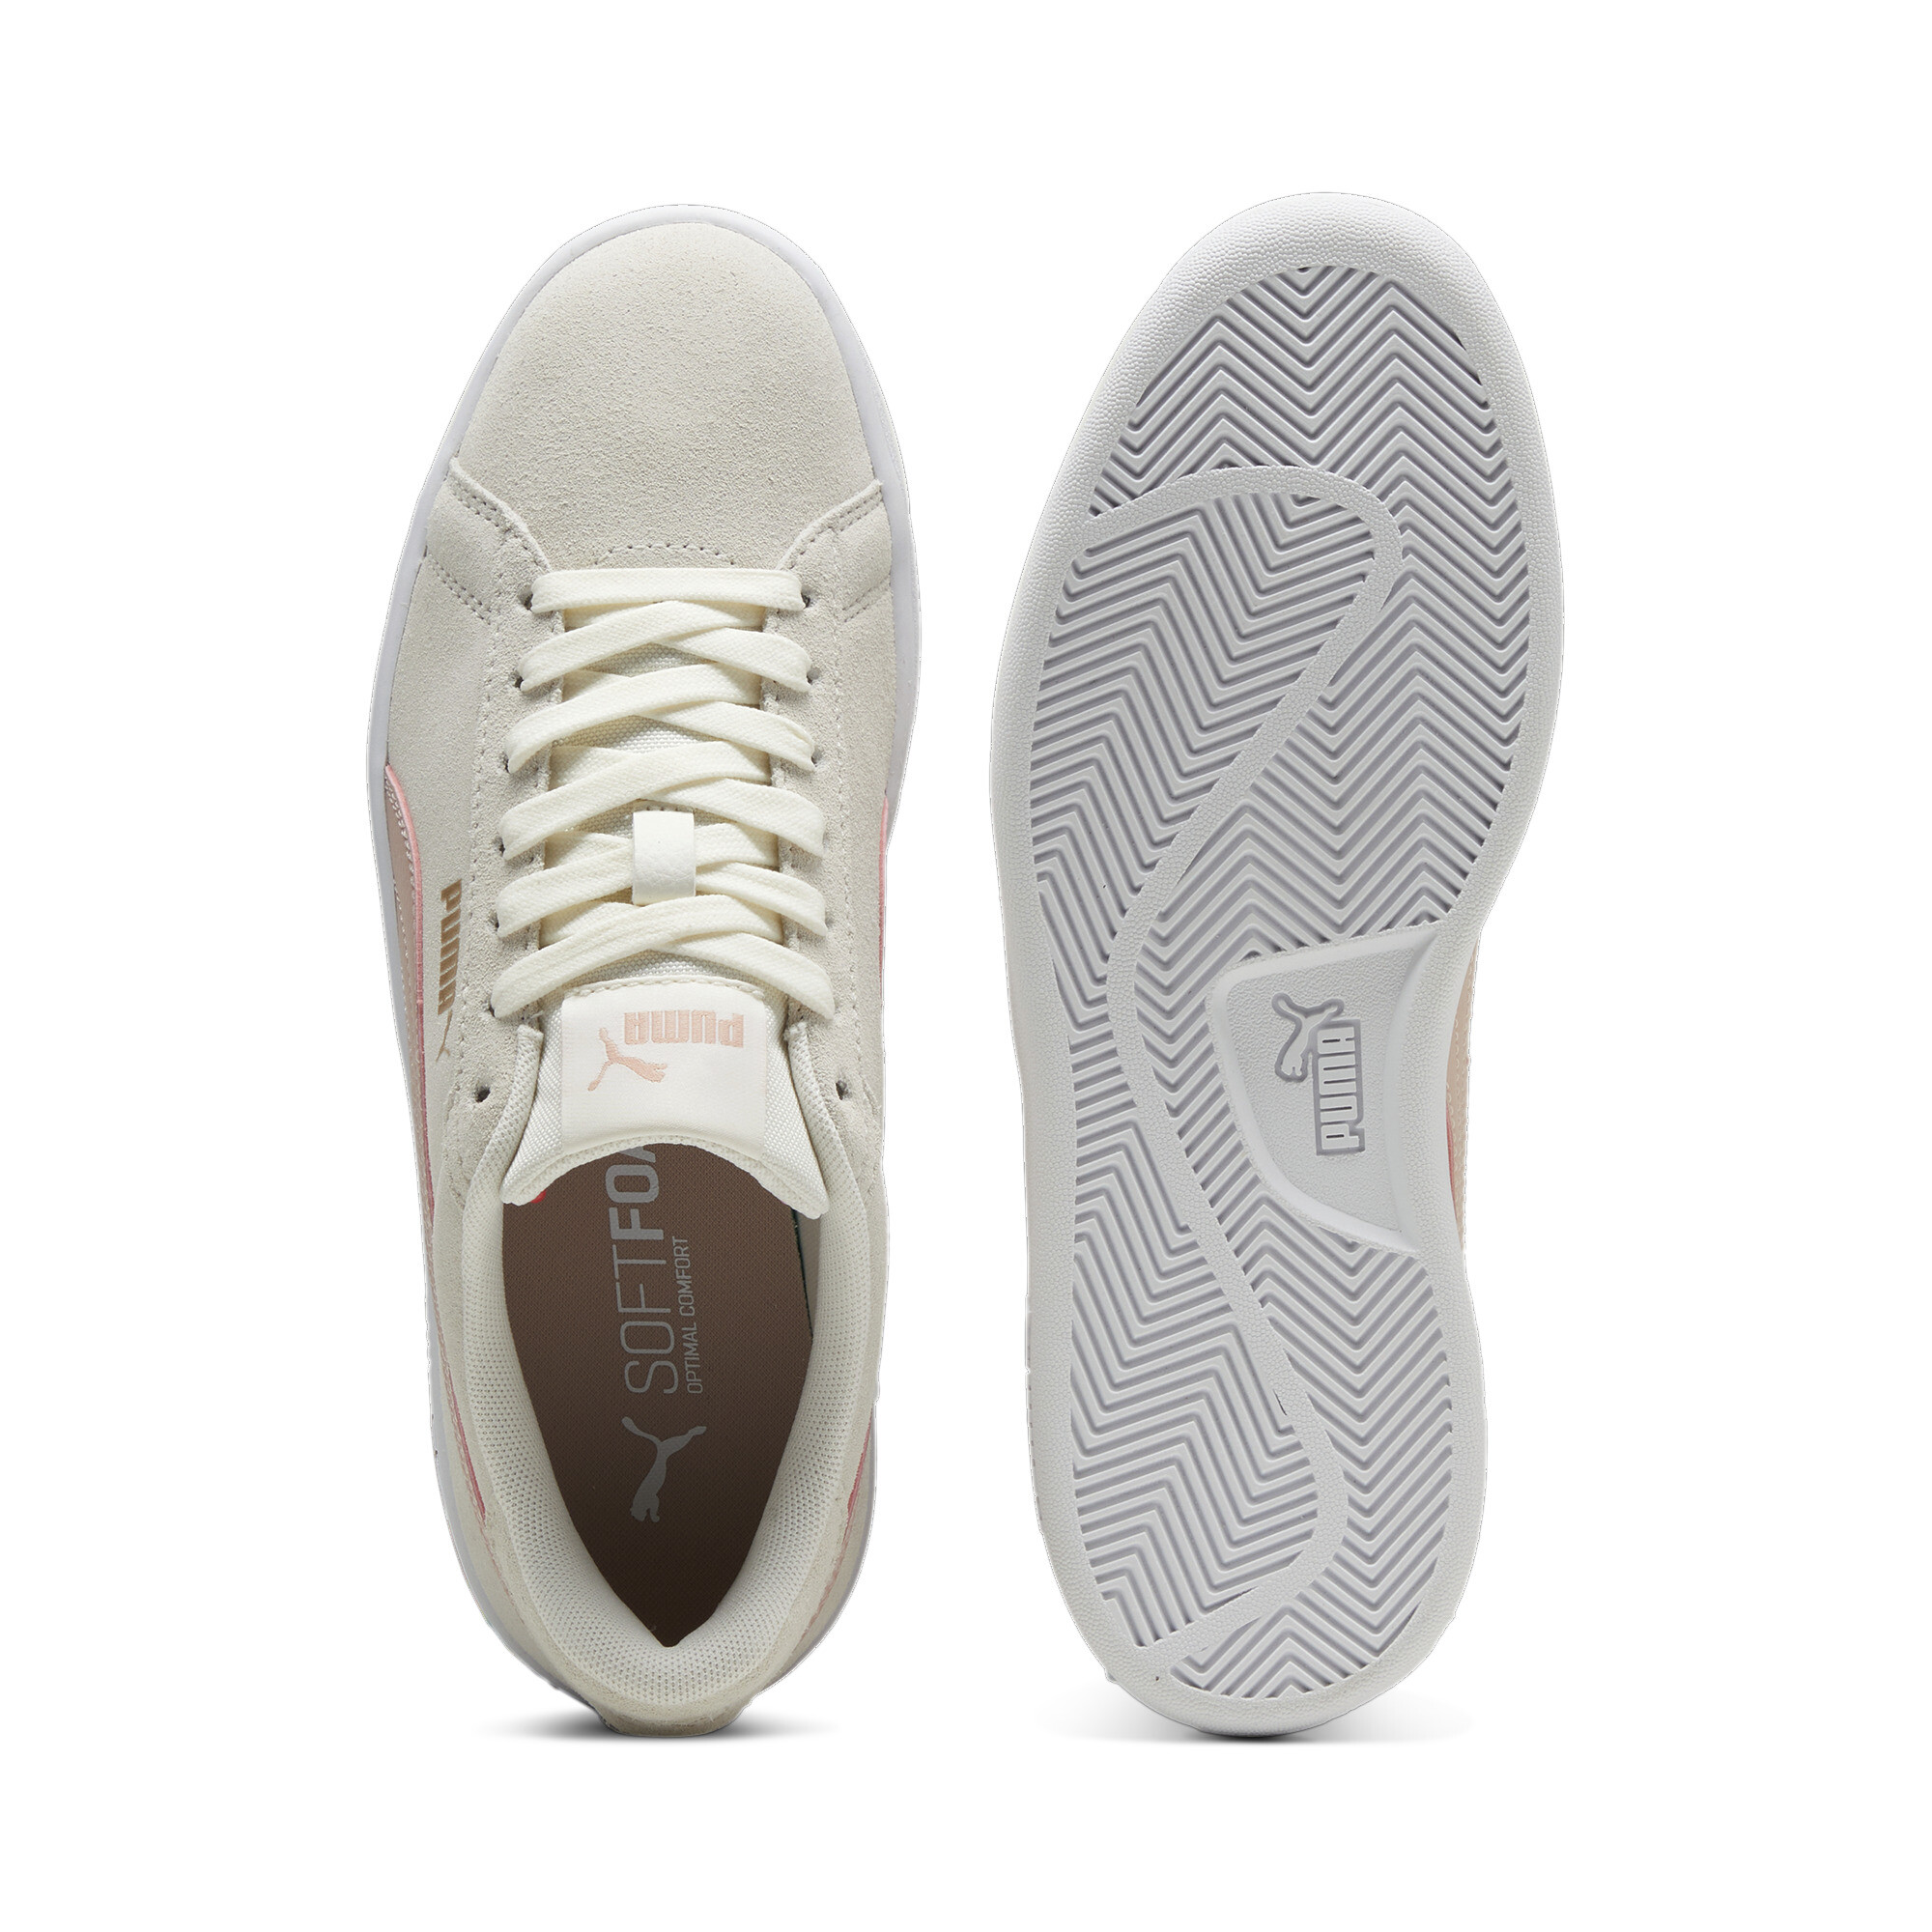 Puma Smash 3.0 Sneakers, White, Size 35.5, Shoes